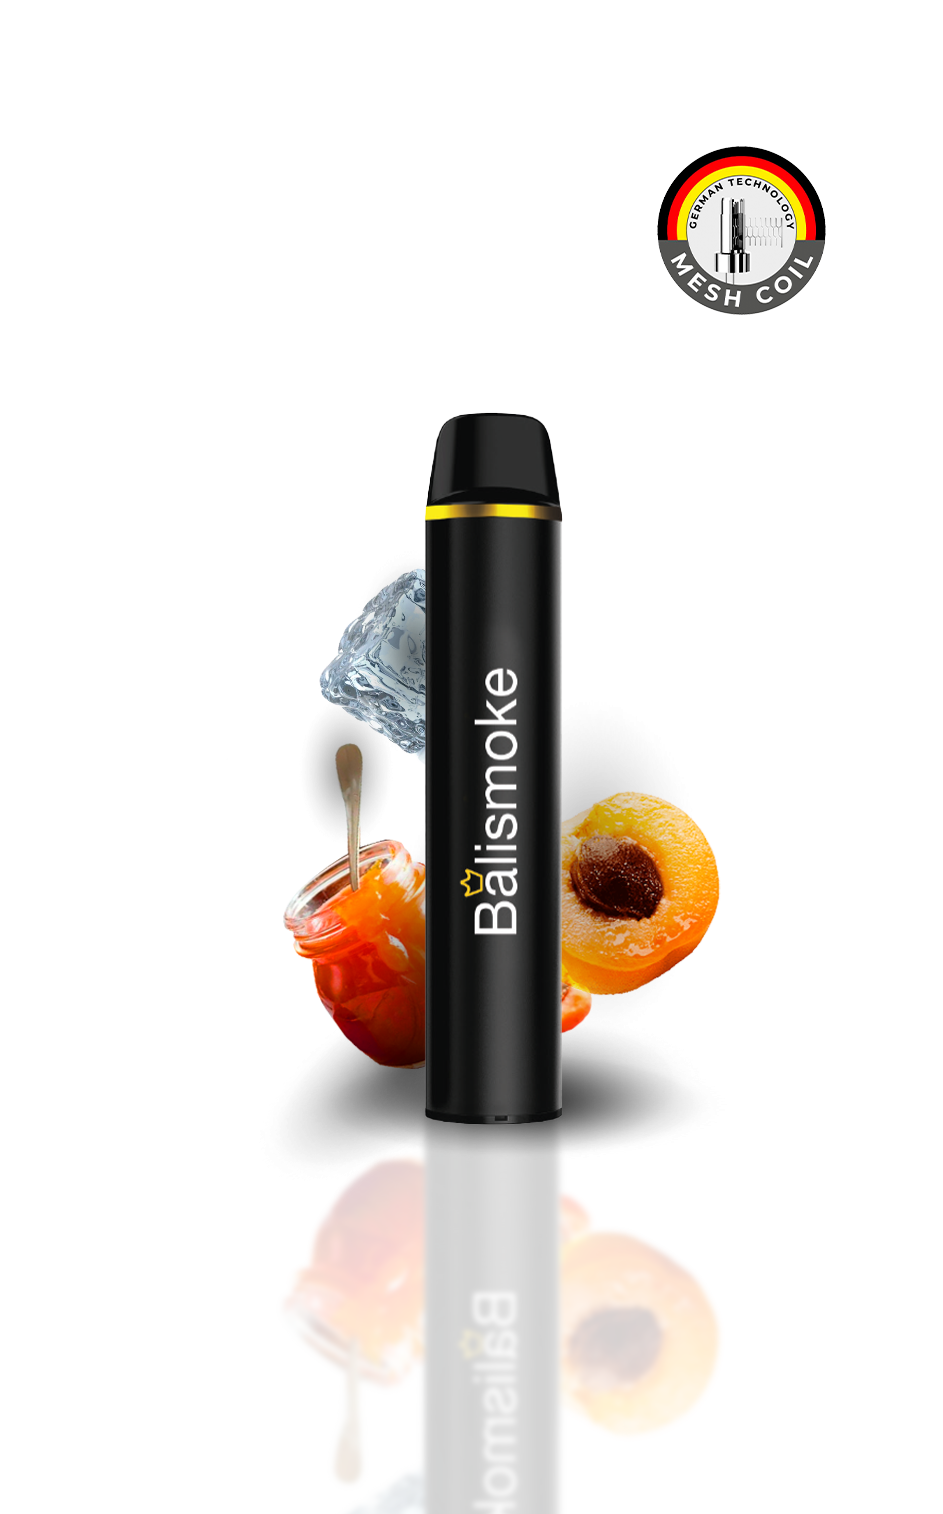 Balismoke - Disposable electronic cigarettes